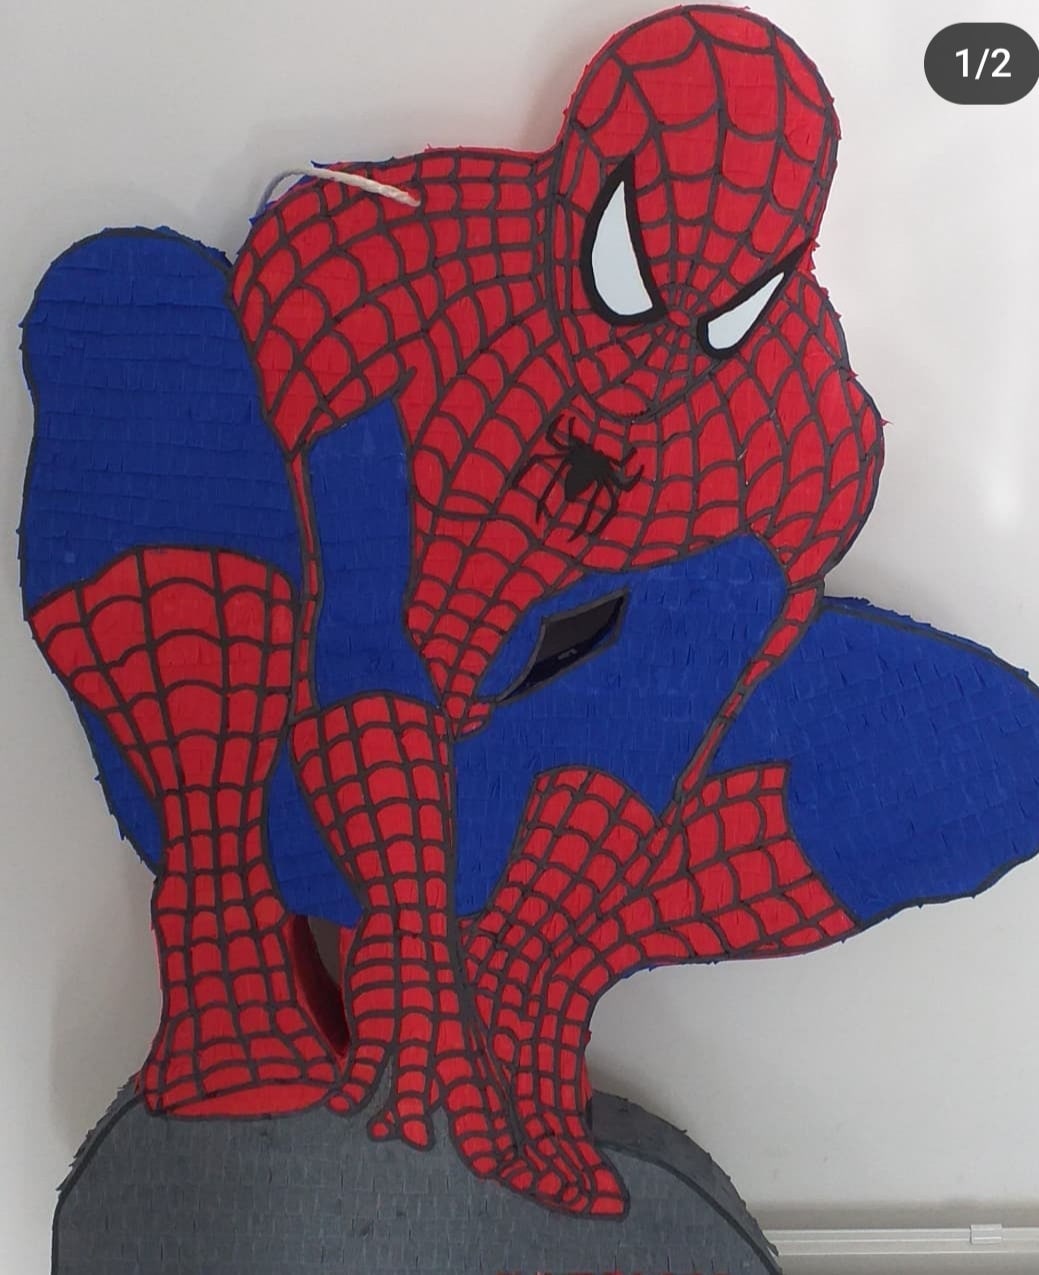 Incroyable Spiderman Pinata, soirée à thème Spiderman, fournitures